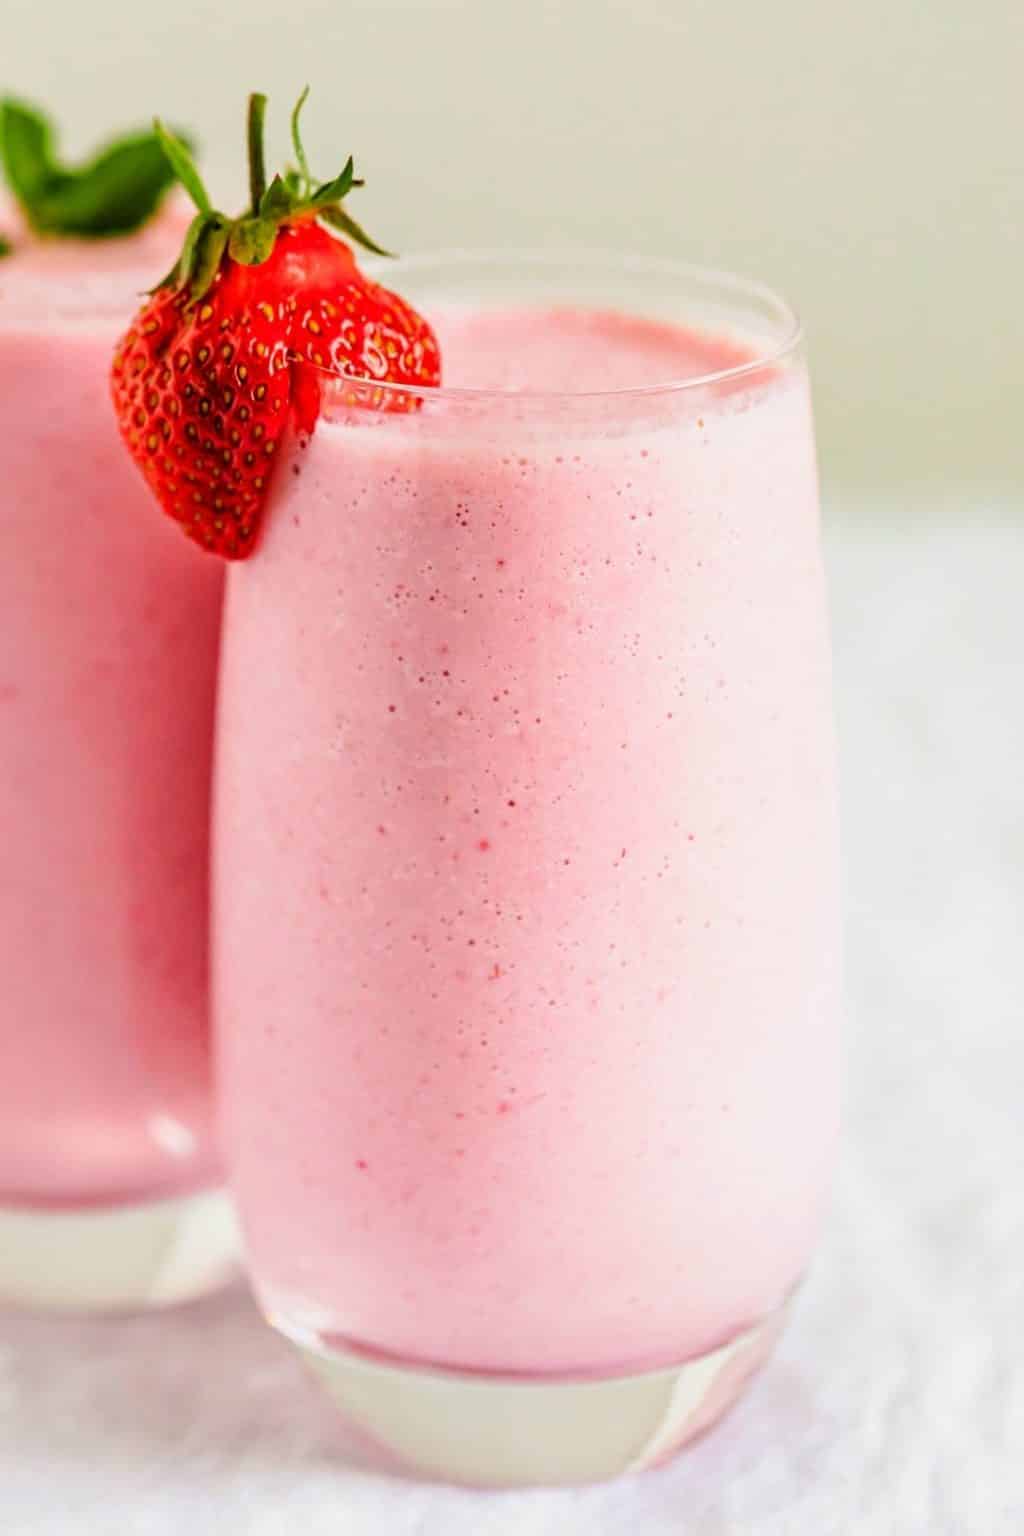 Keto Strawberry Smoothie (4 Ingredients!) - MyKetoPlate